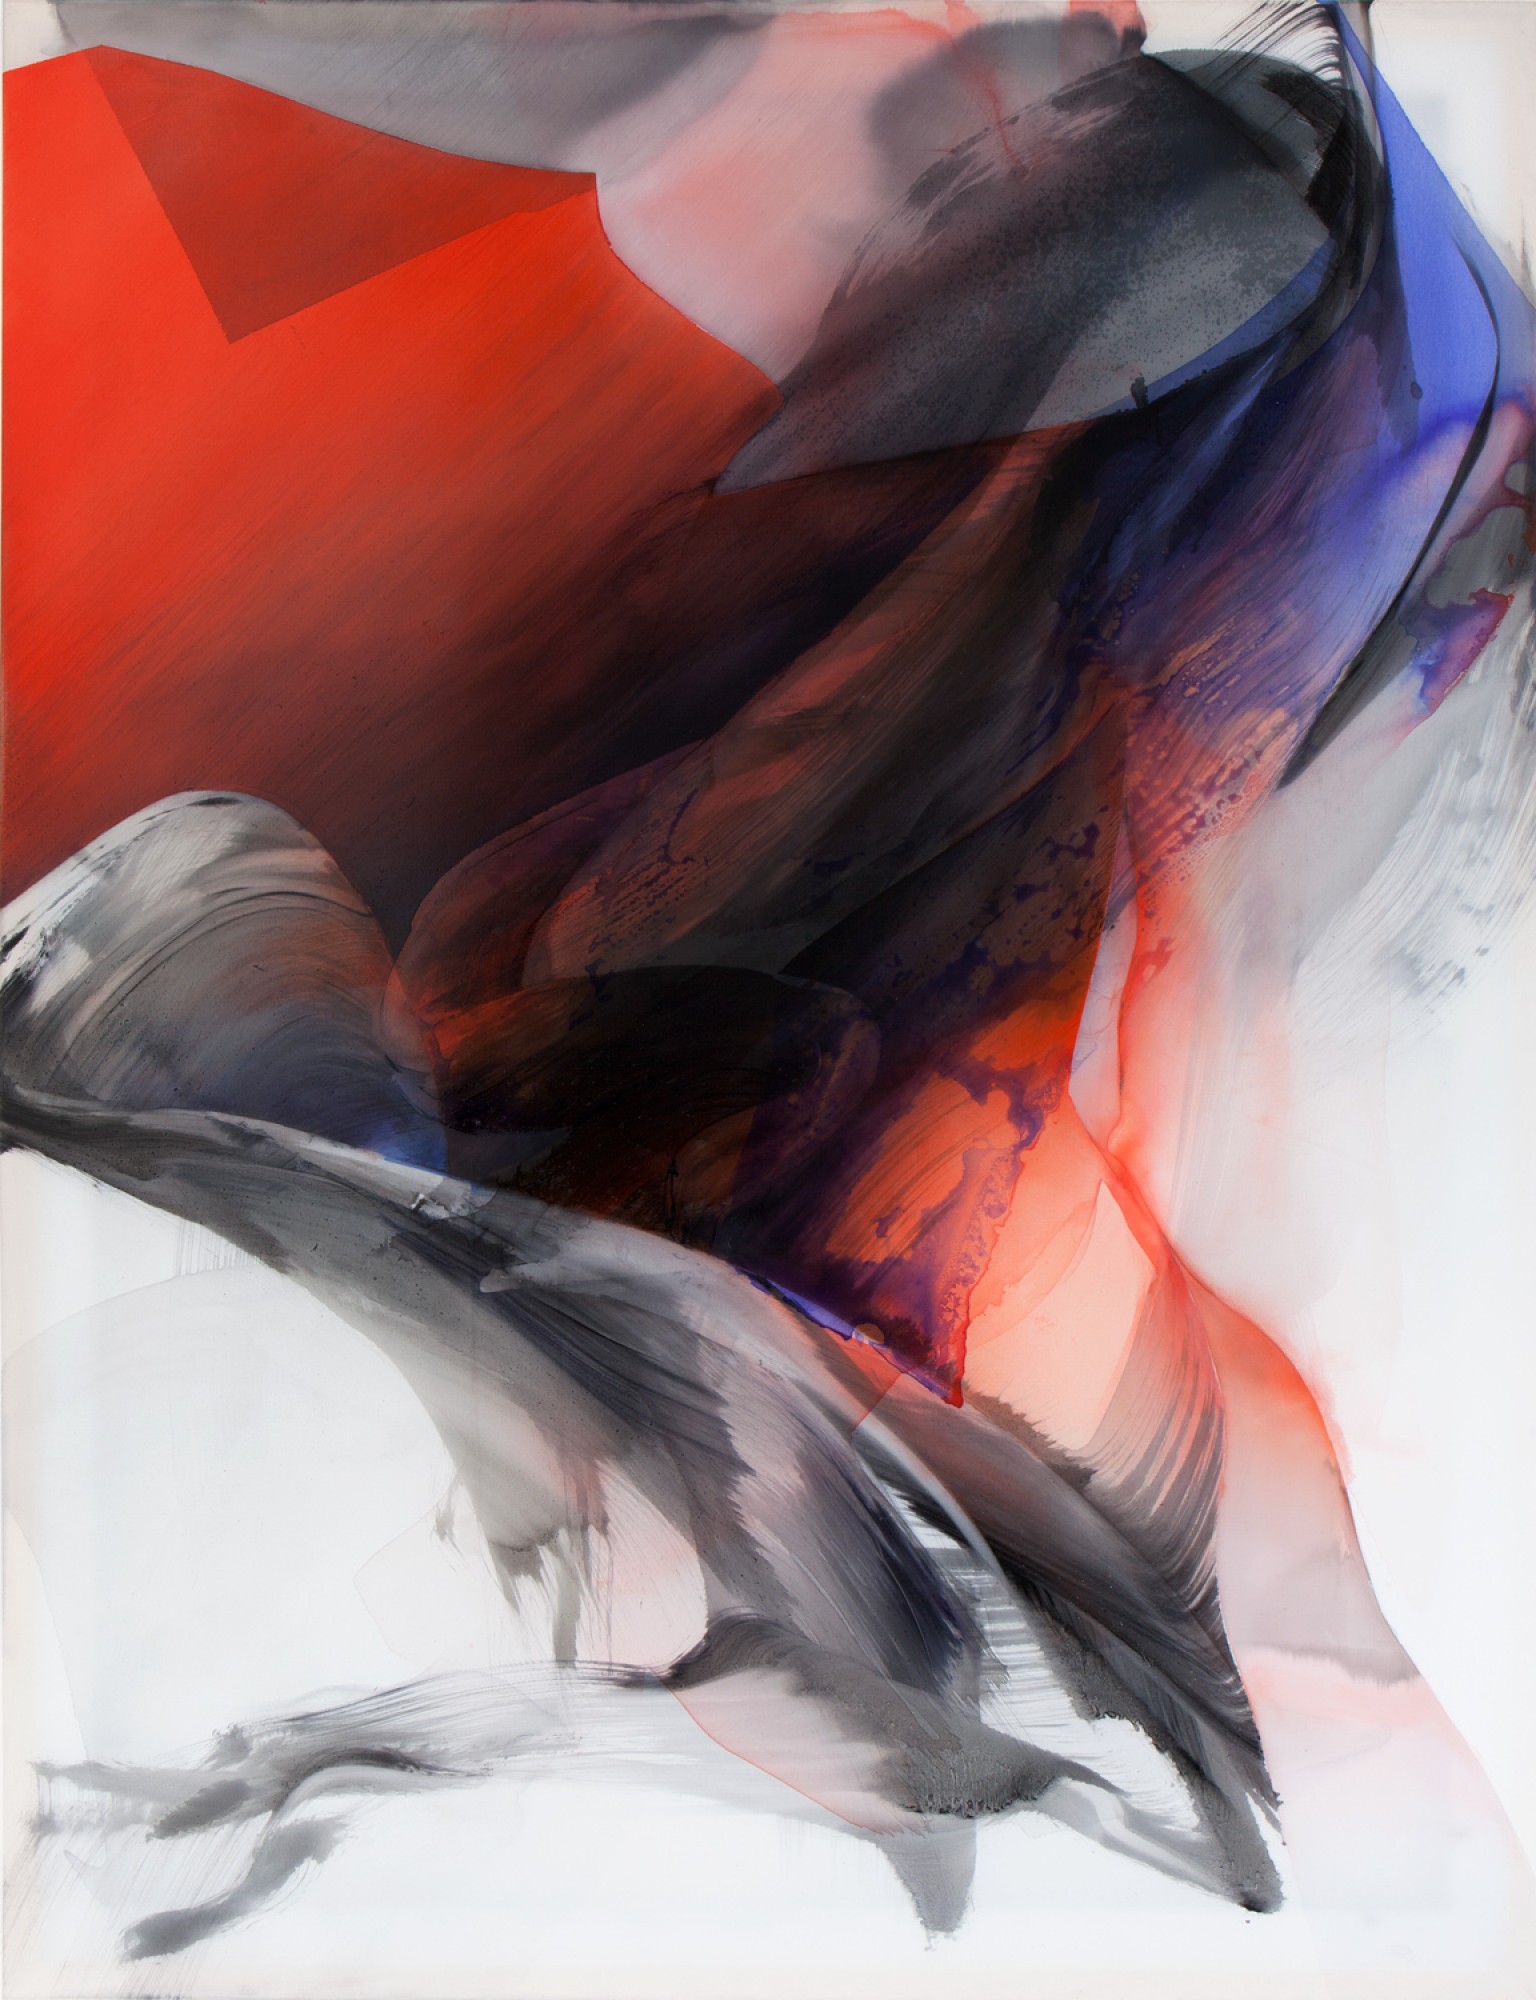 Natascha Schmitten - Supersaturation, 2019, ink, oil on nylon, 130 x 100 cm